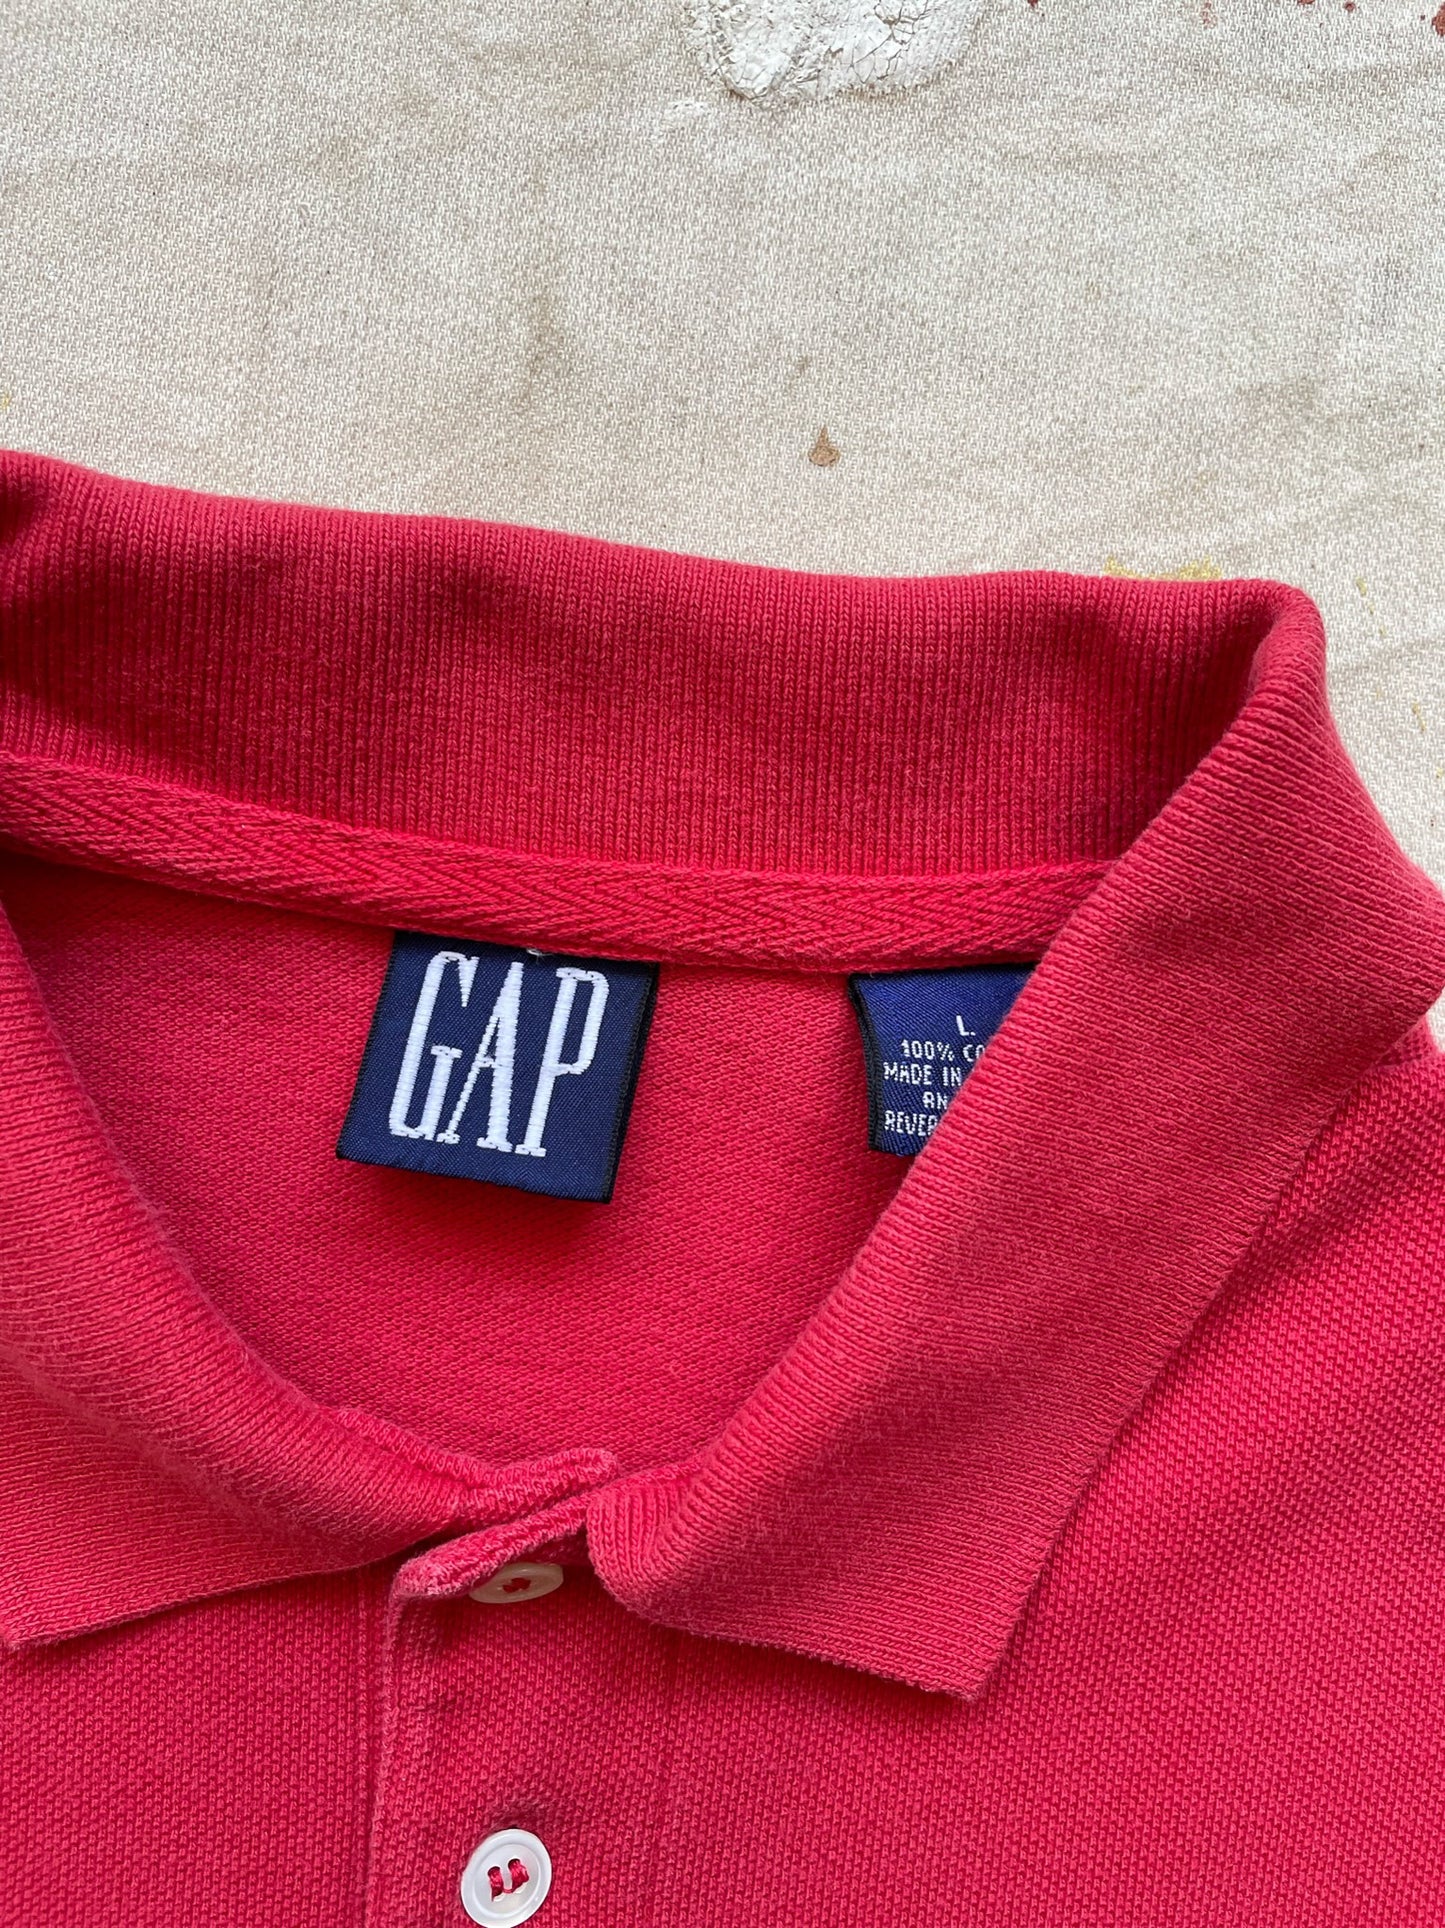 90's GAP Polo Shirt—[L]